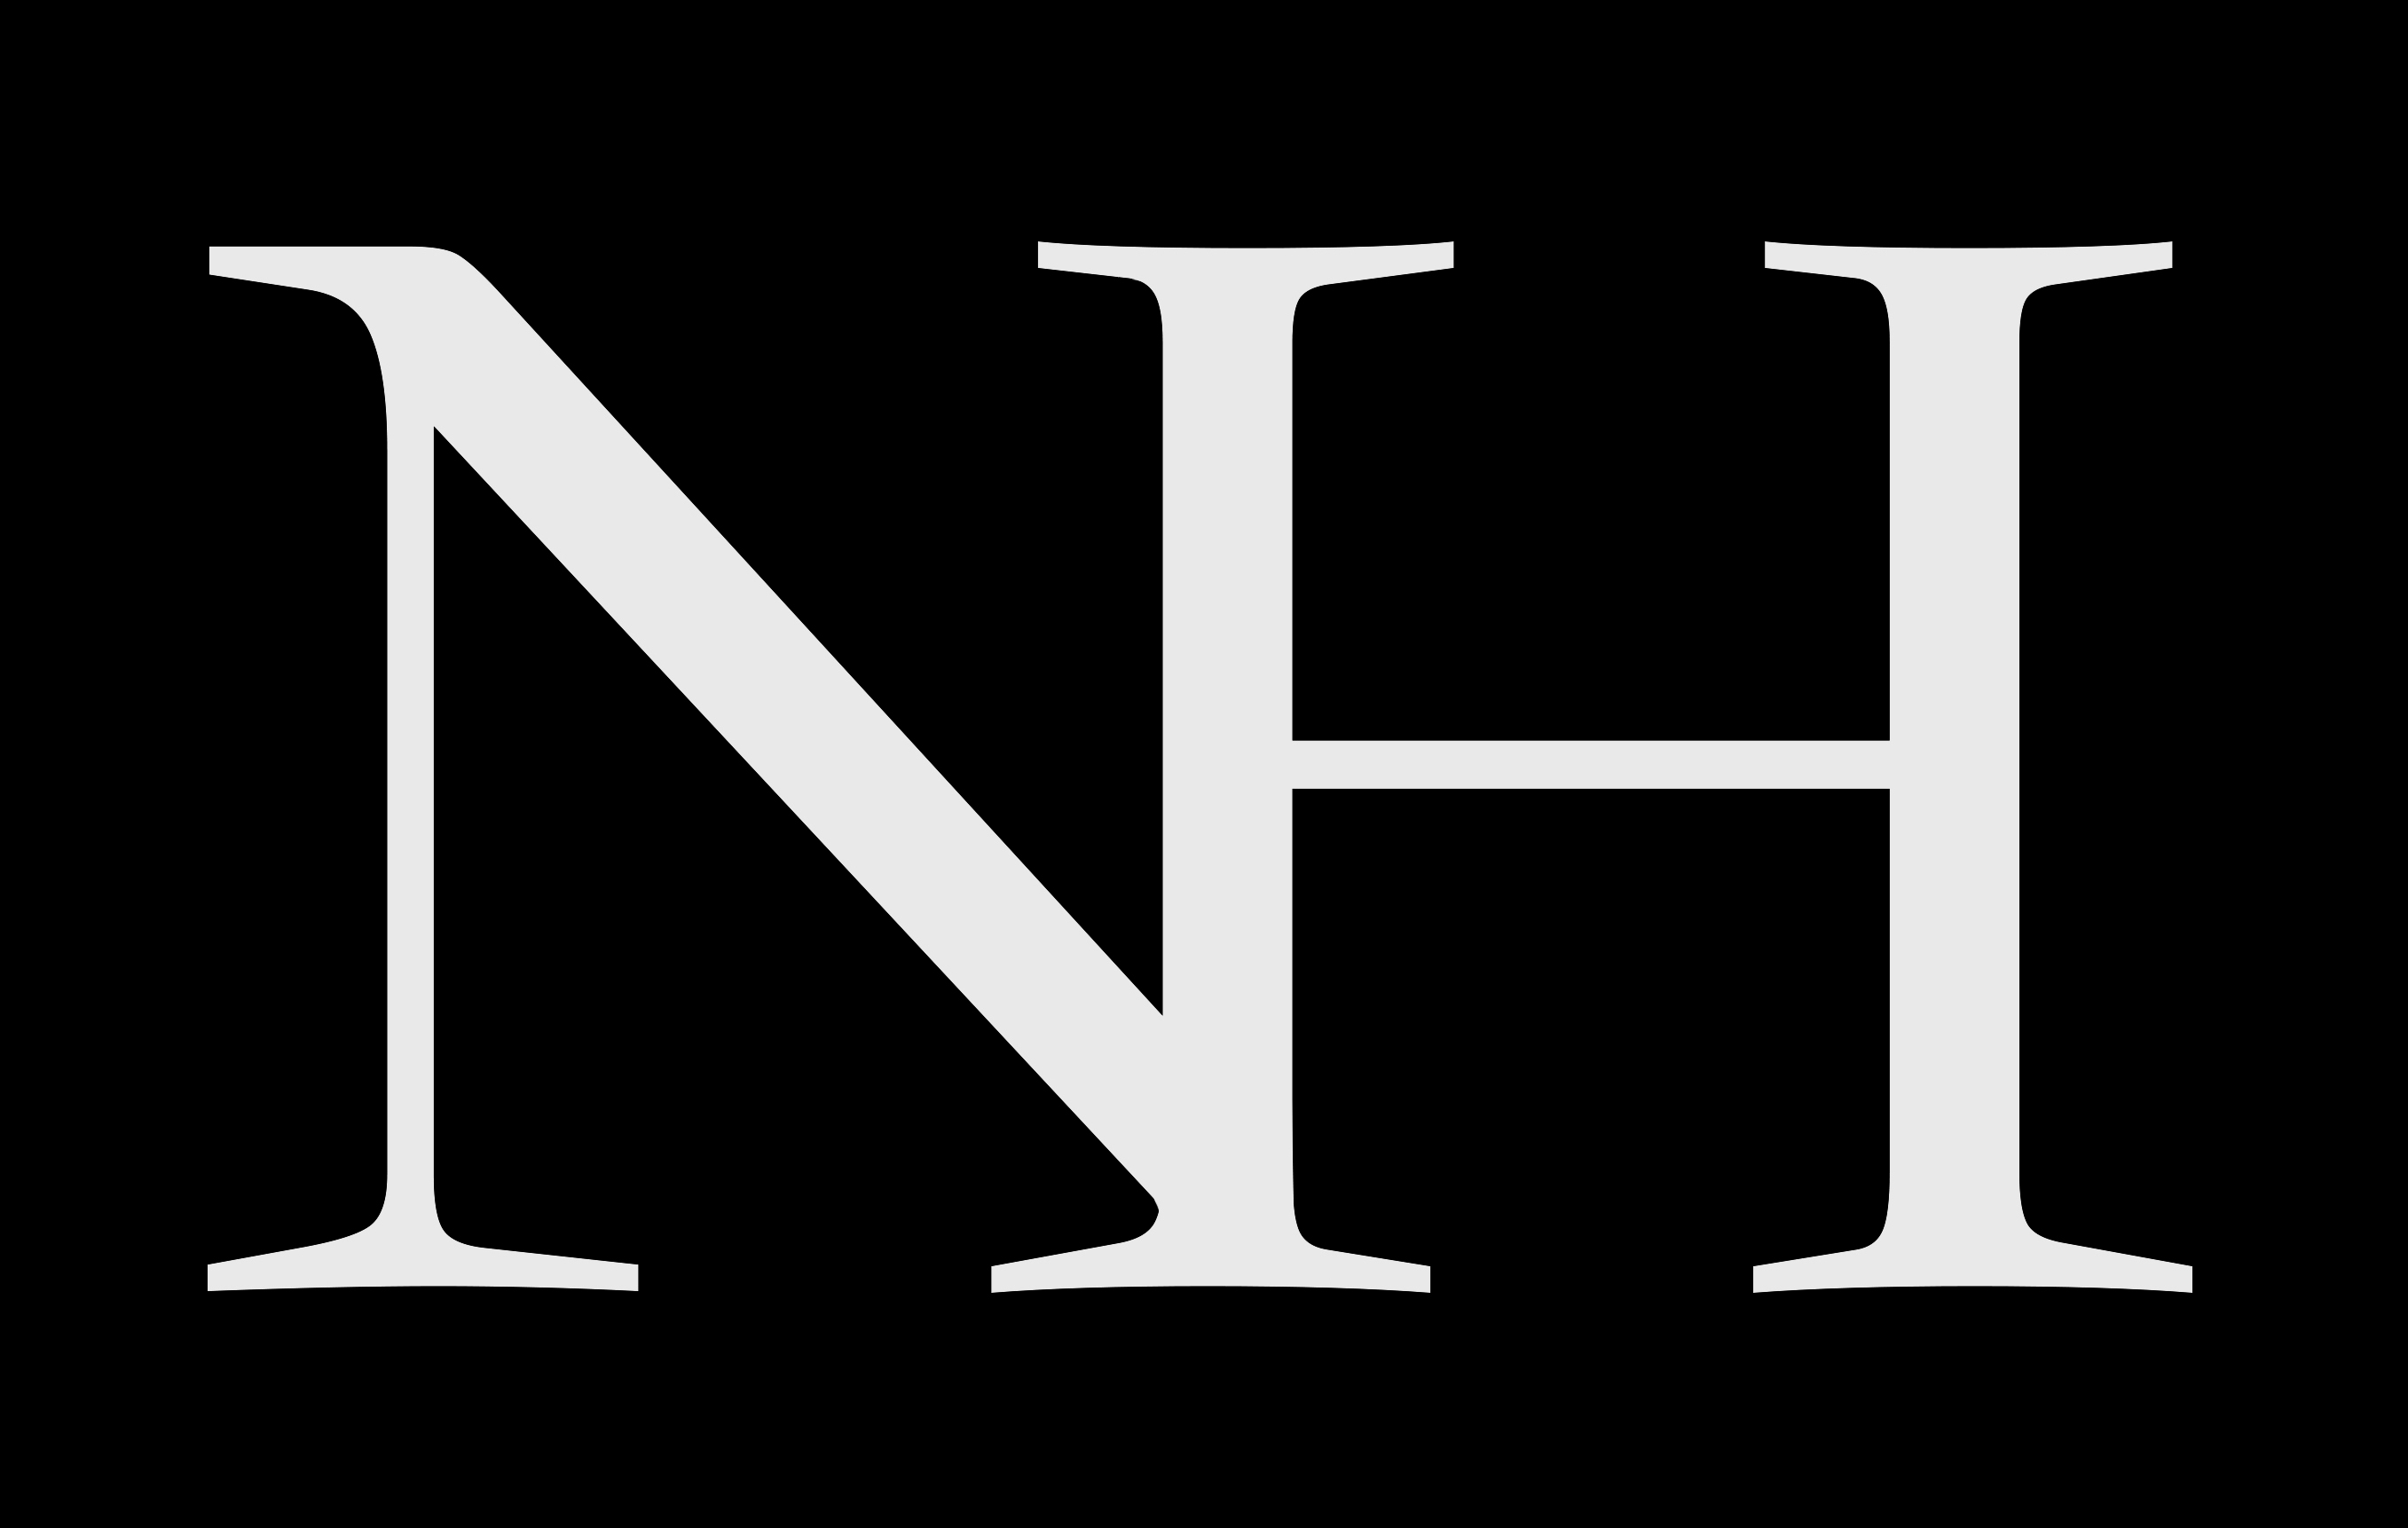 NH лого. N H лого. Буквы NH логотип. Логотип NH nazzy. Б а н к n